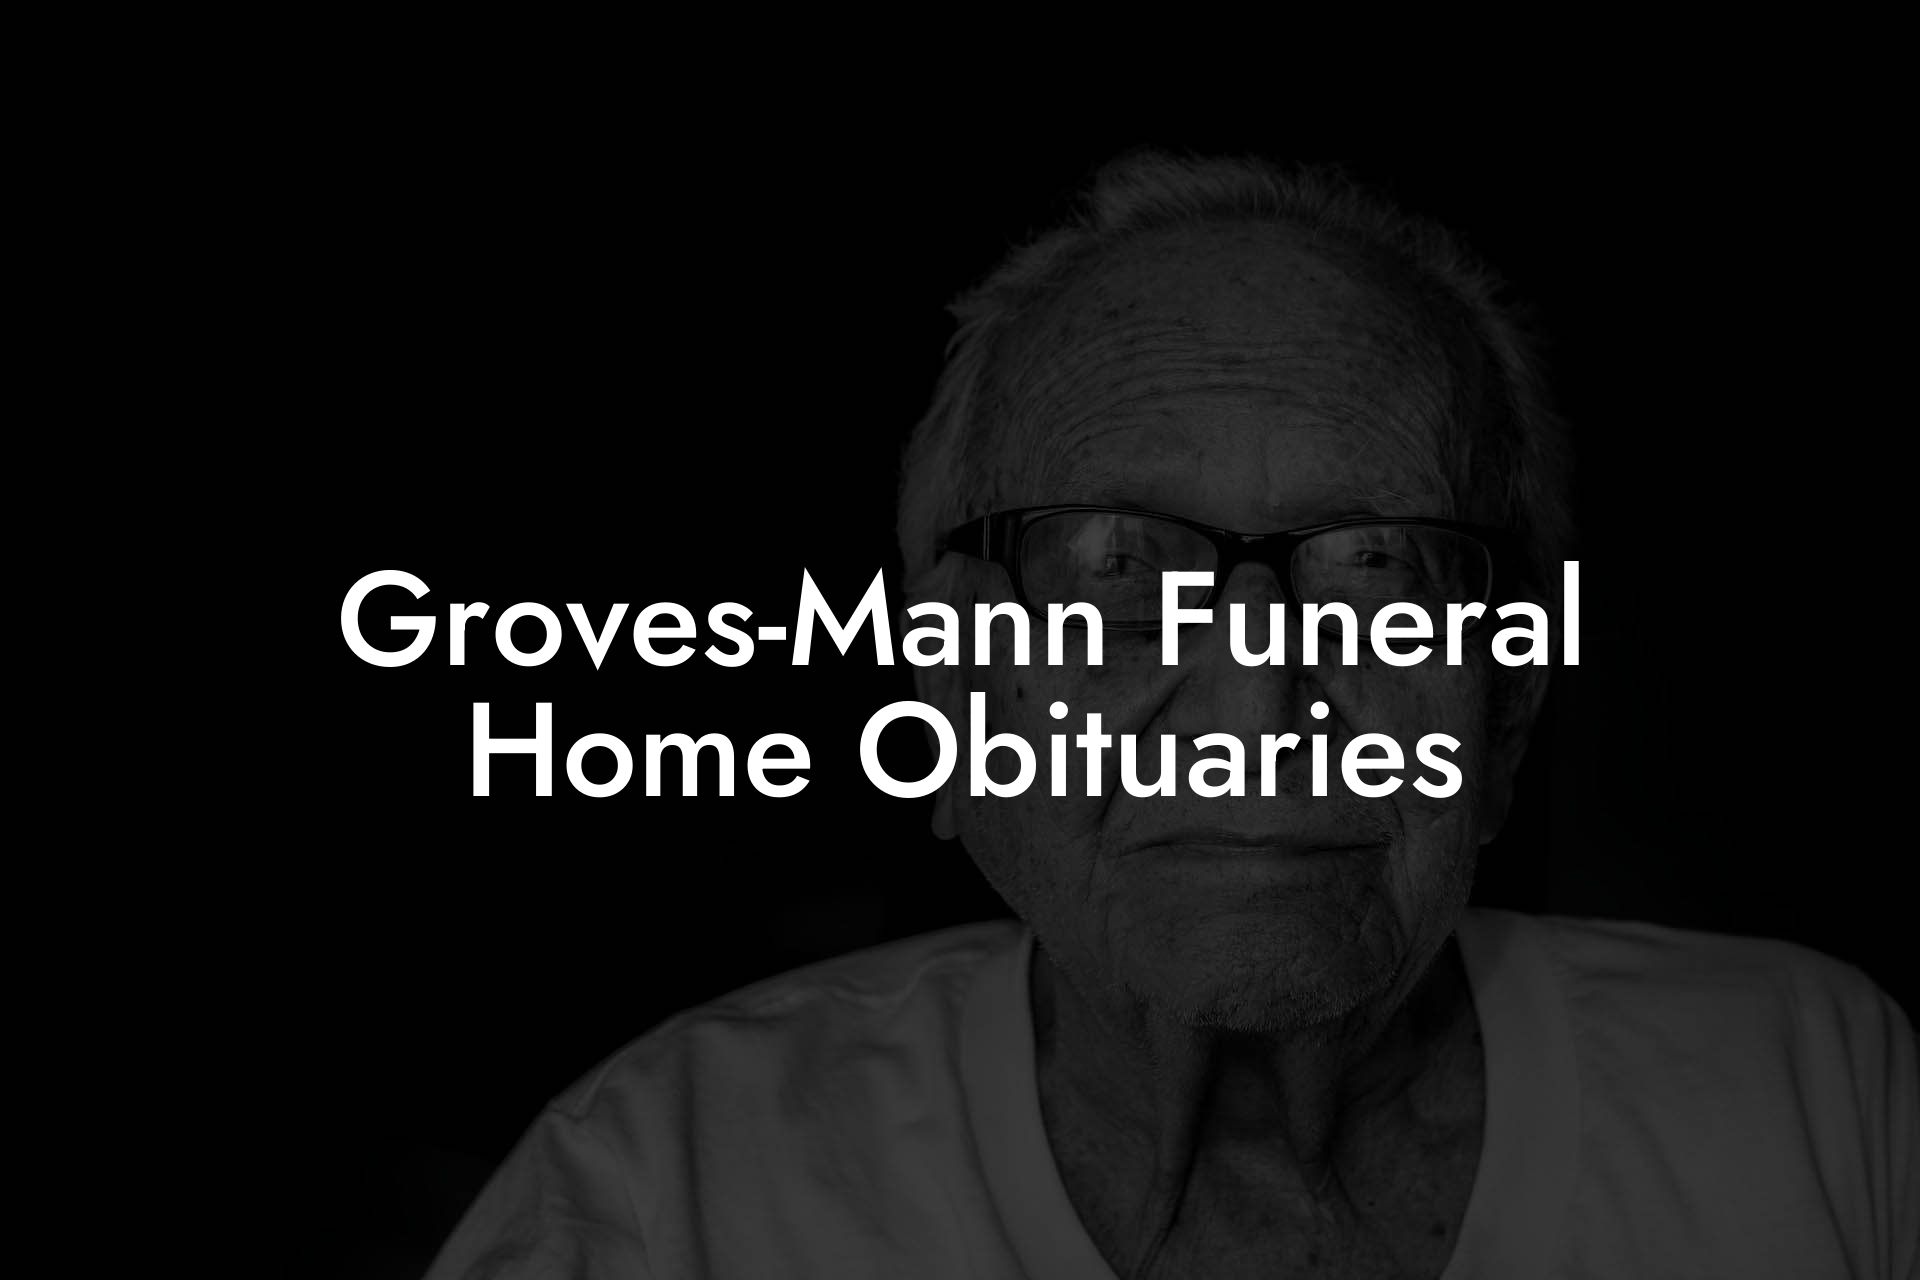 Groves-Mann Funeral Home Obituaries